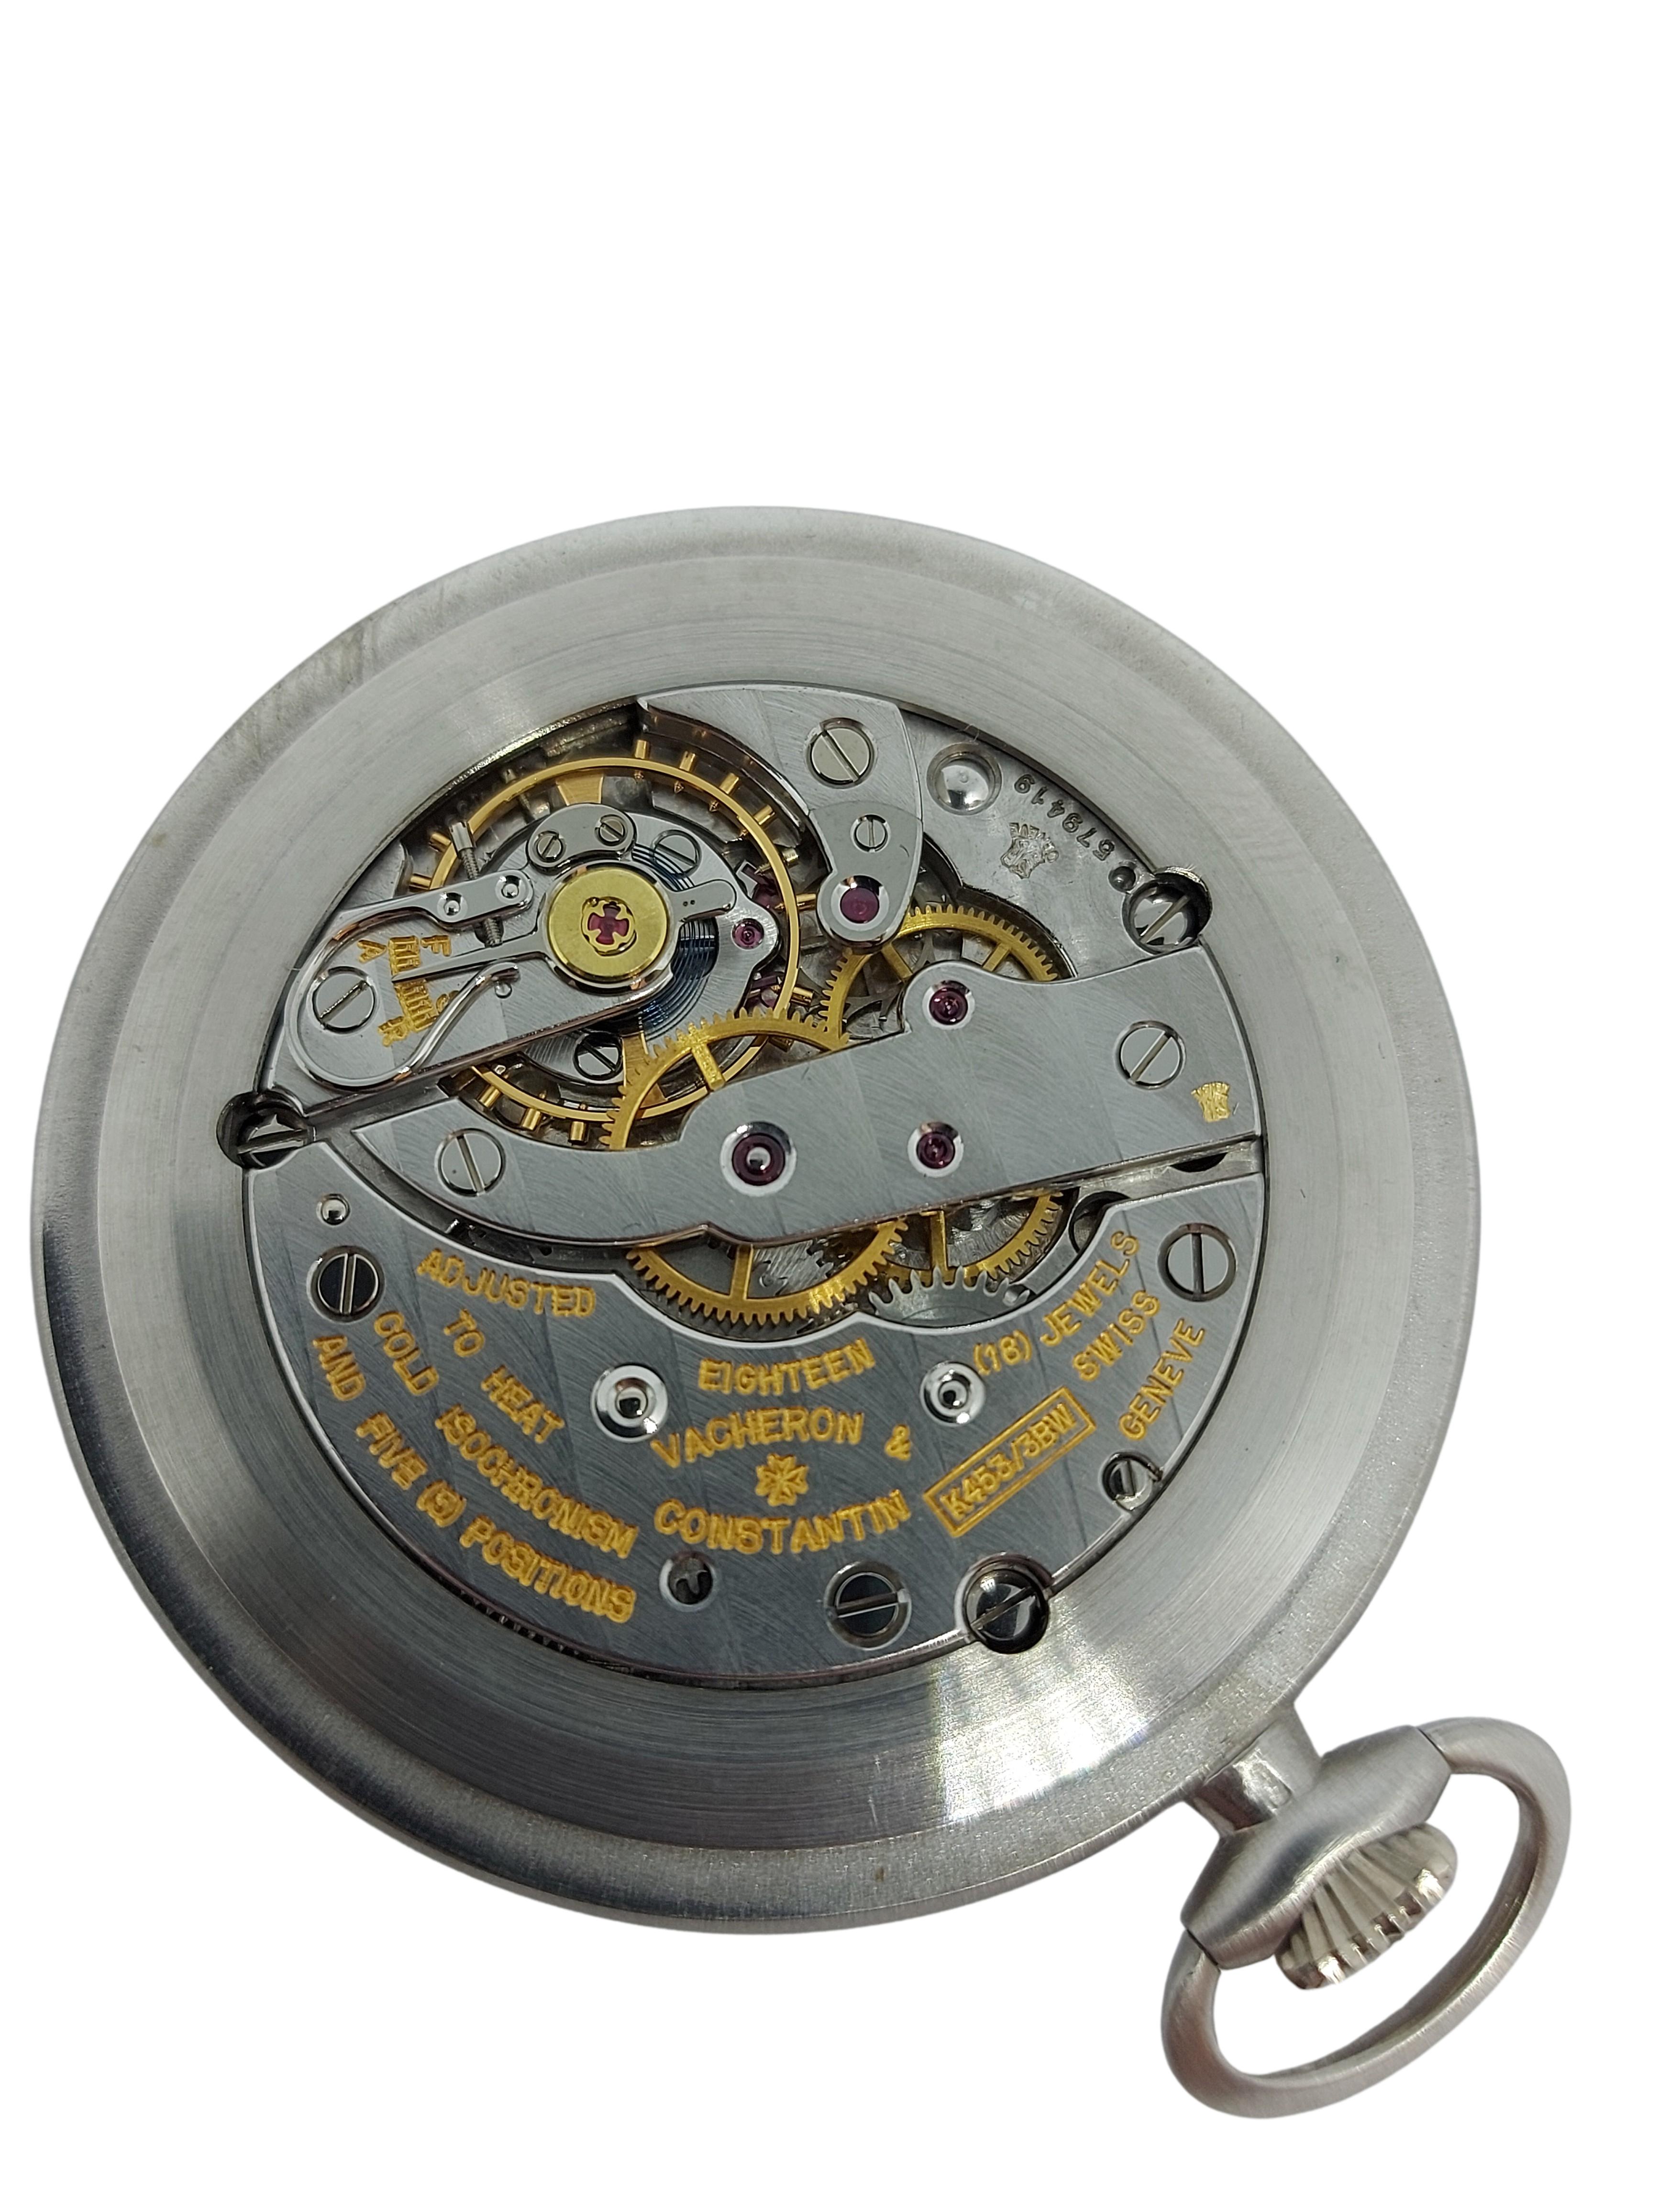 18kt White Gold Vacheron Constantin Pocket Watch, Ref 7874, Cal K453 Rare 2